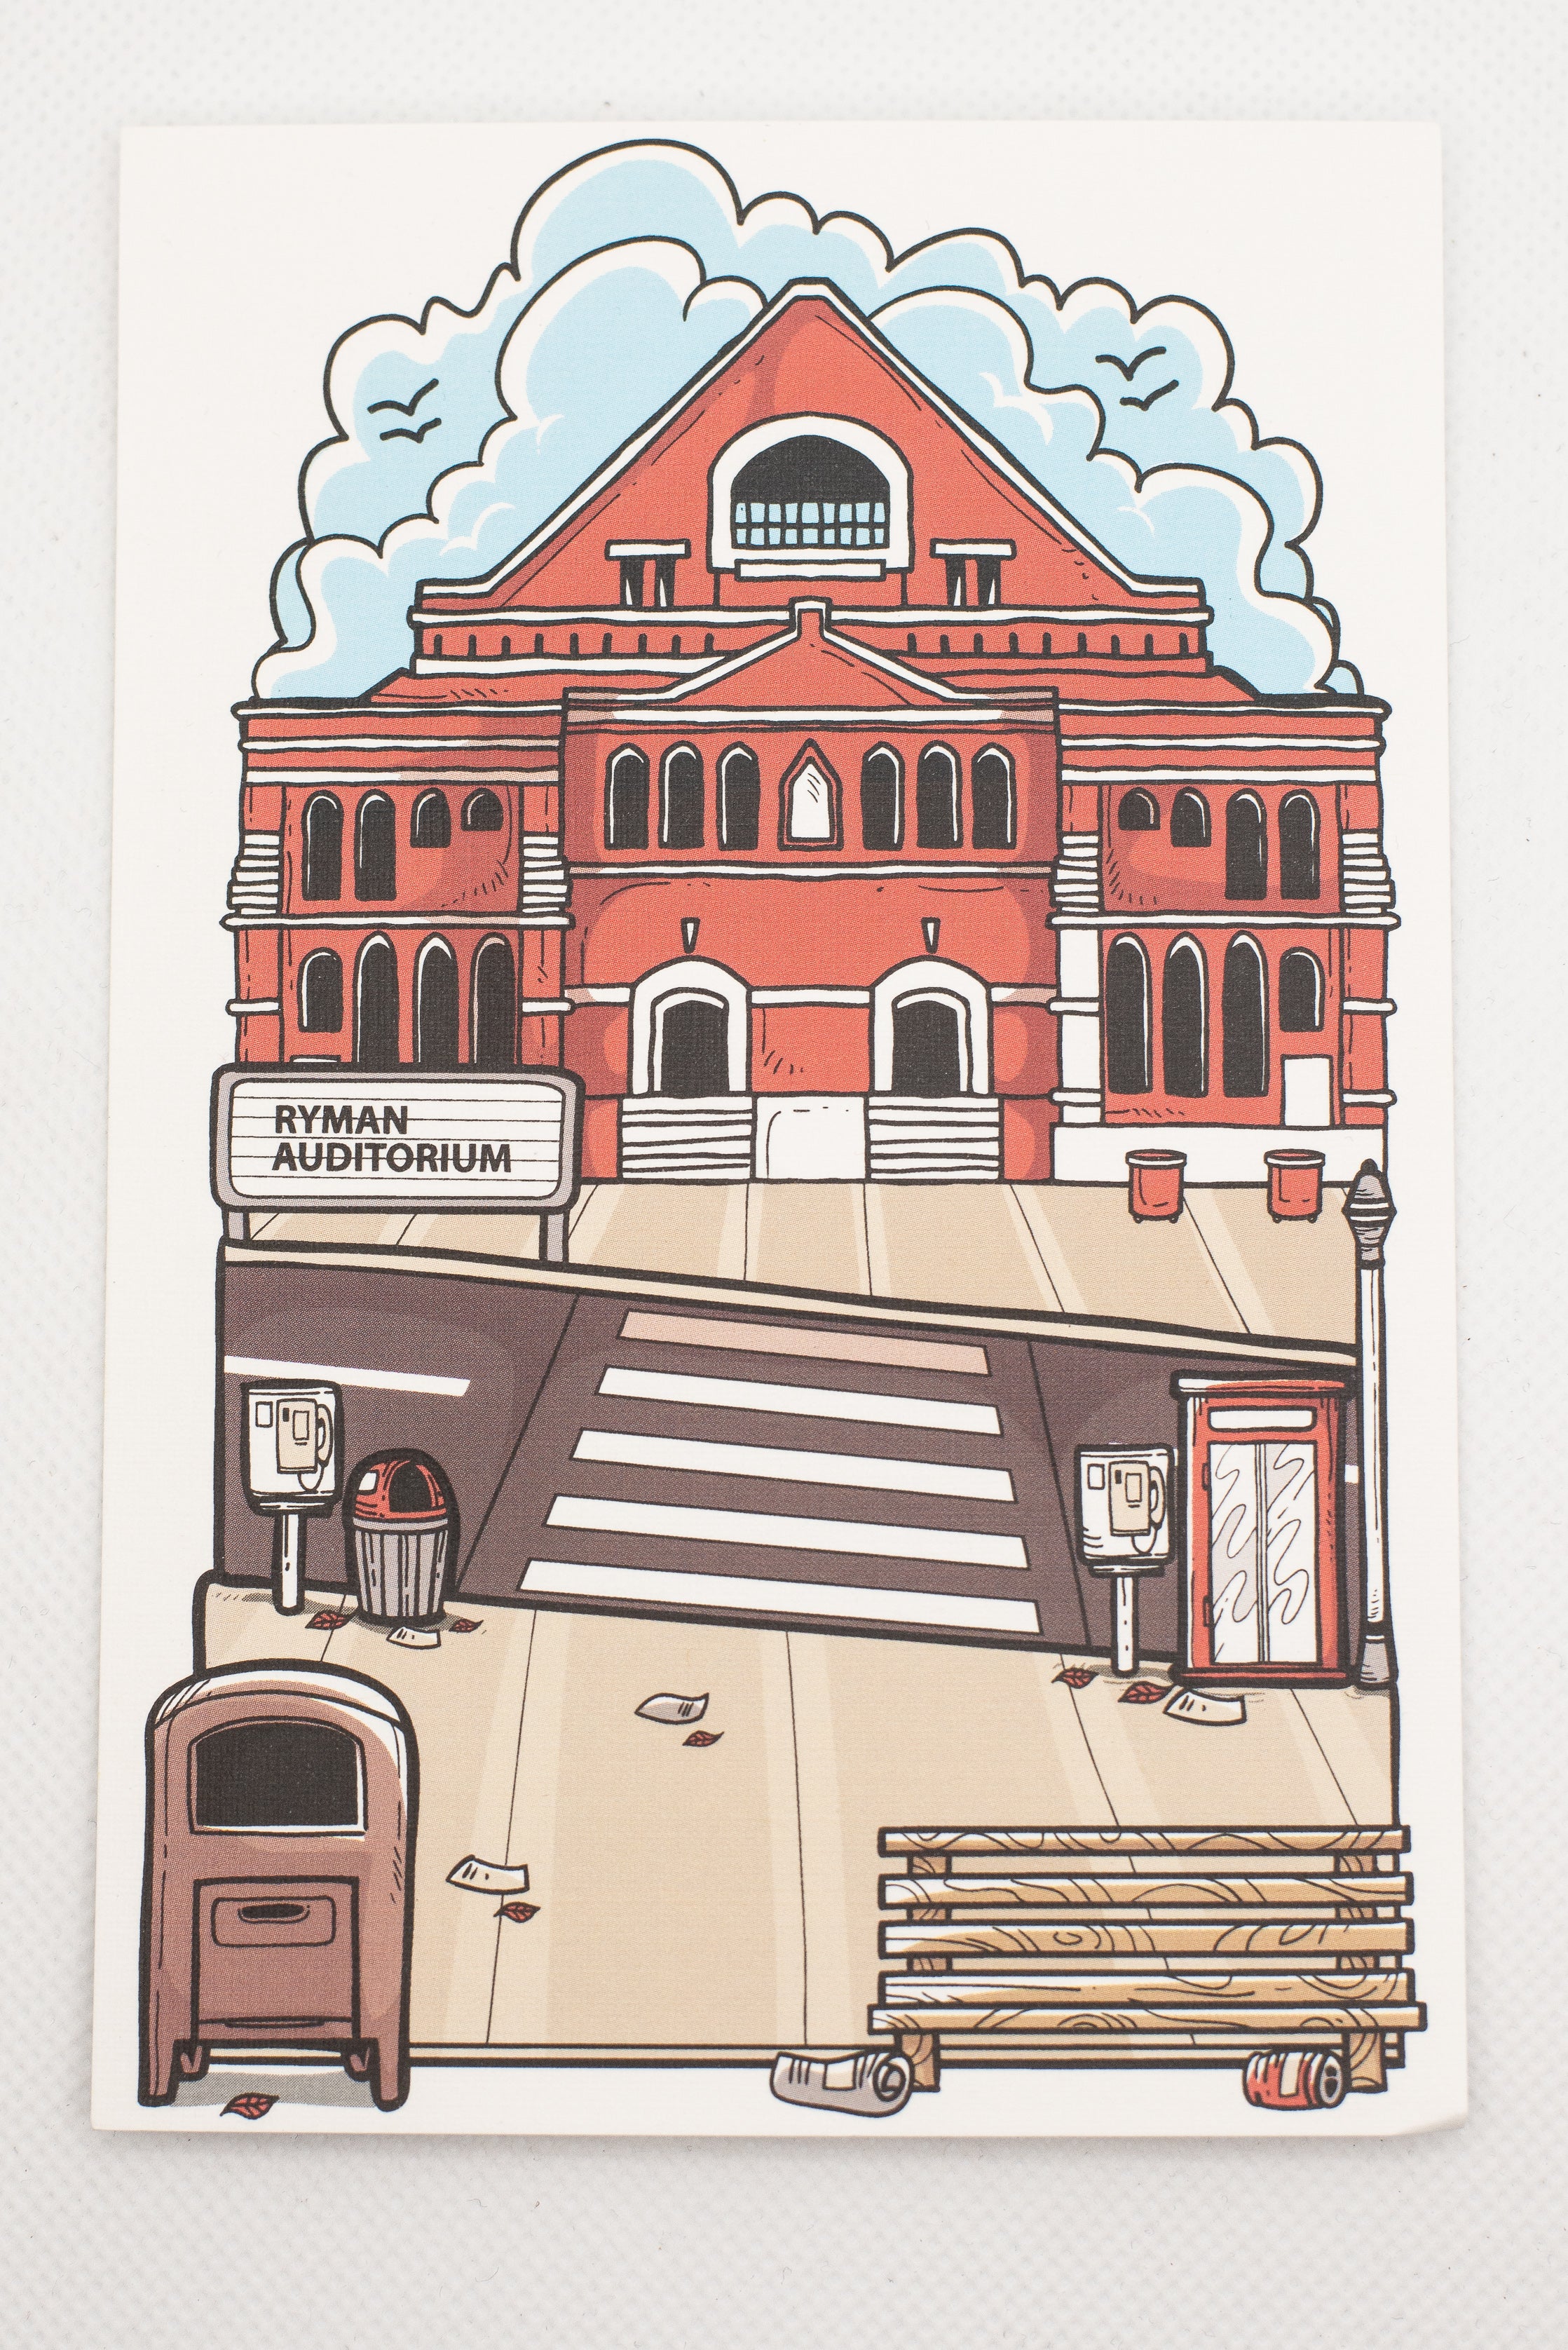 The Ryman Auditorium Postcard